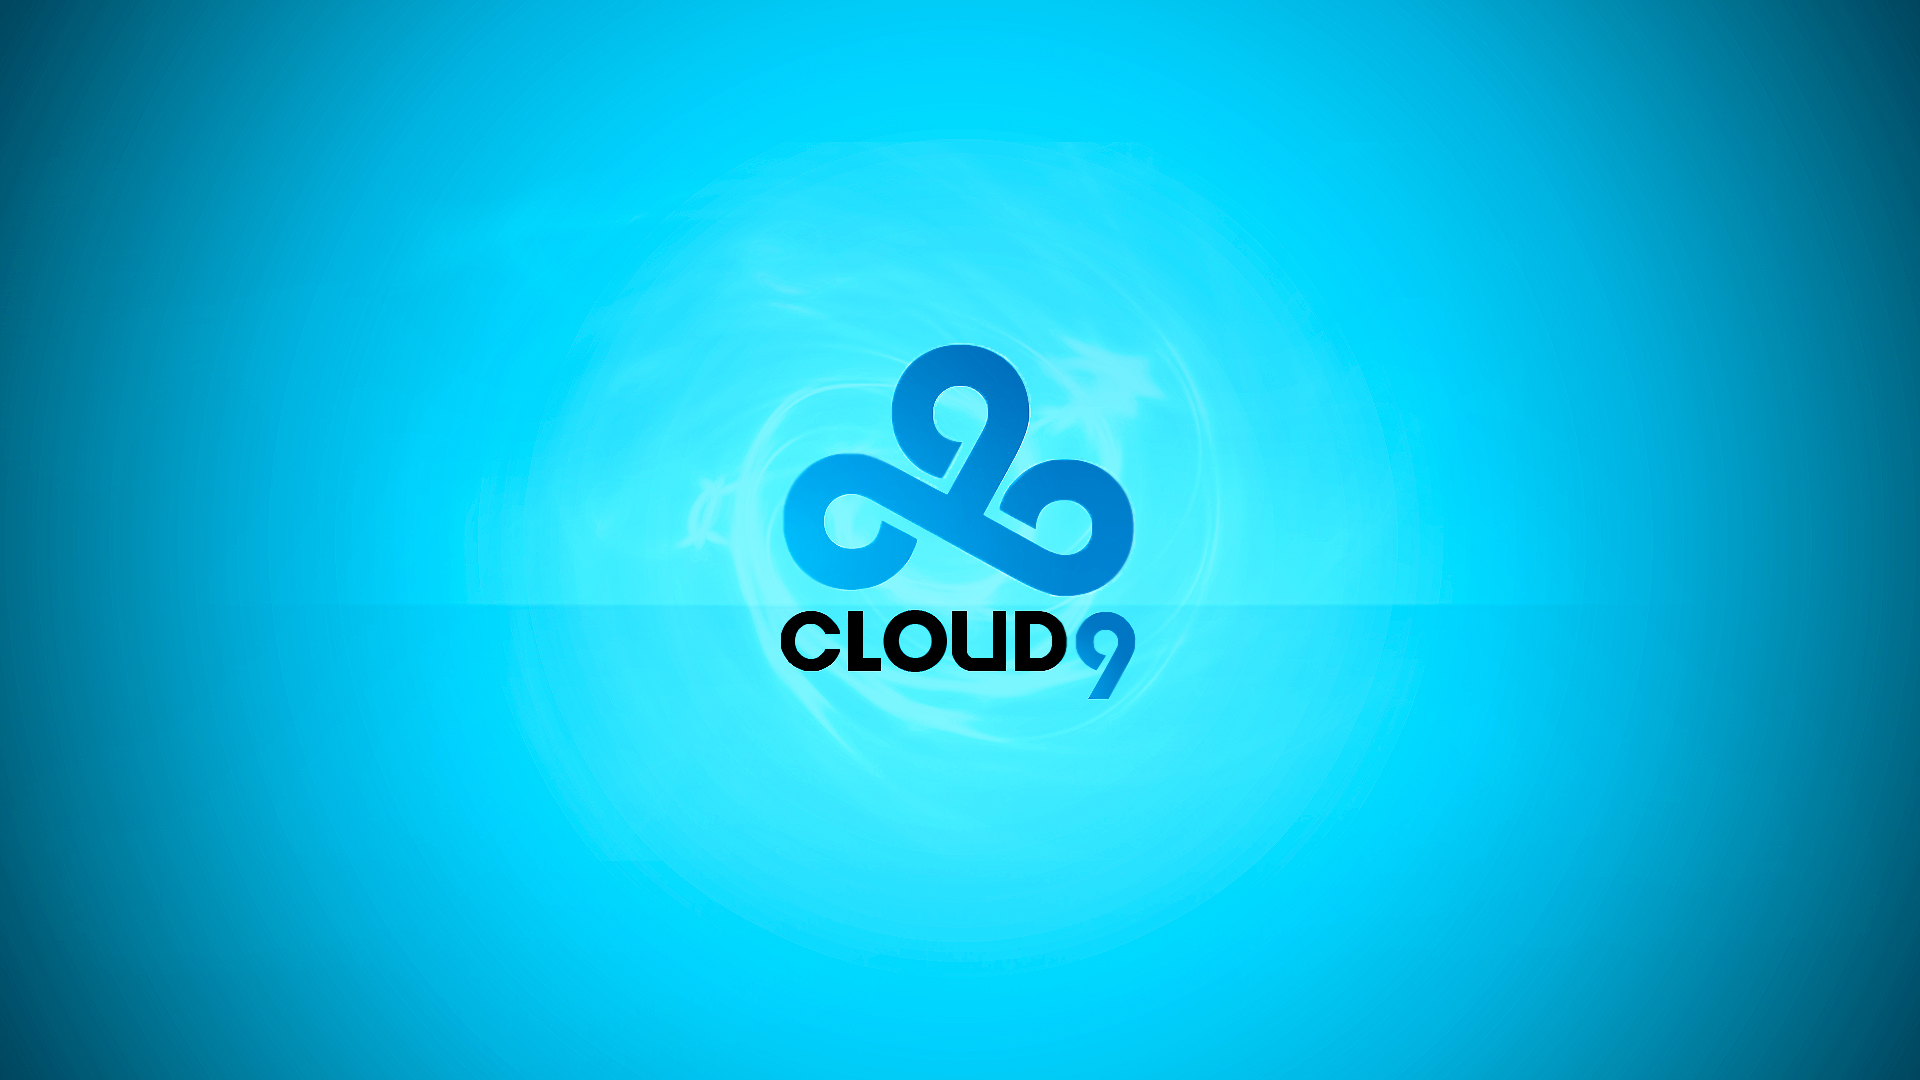 Cloud 9 Desktop Background